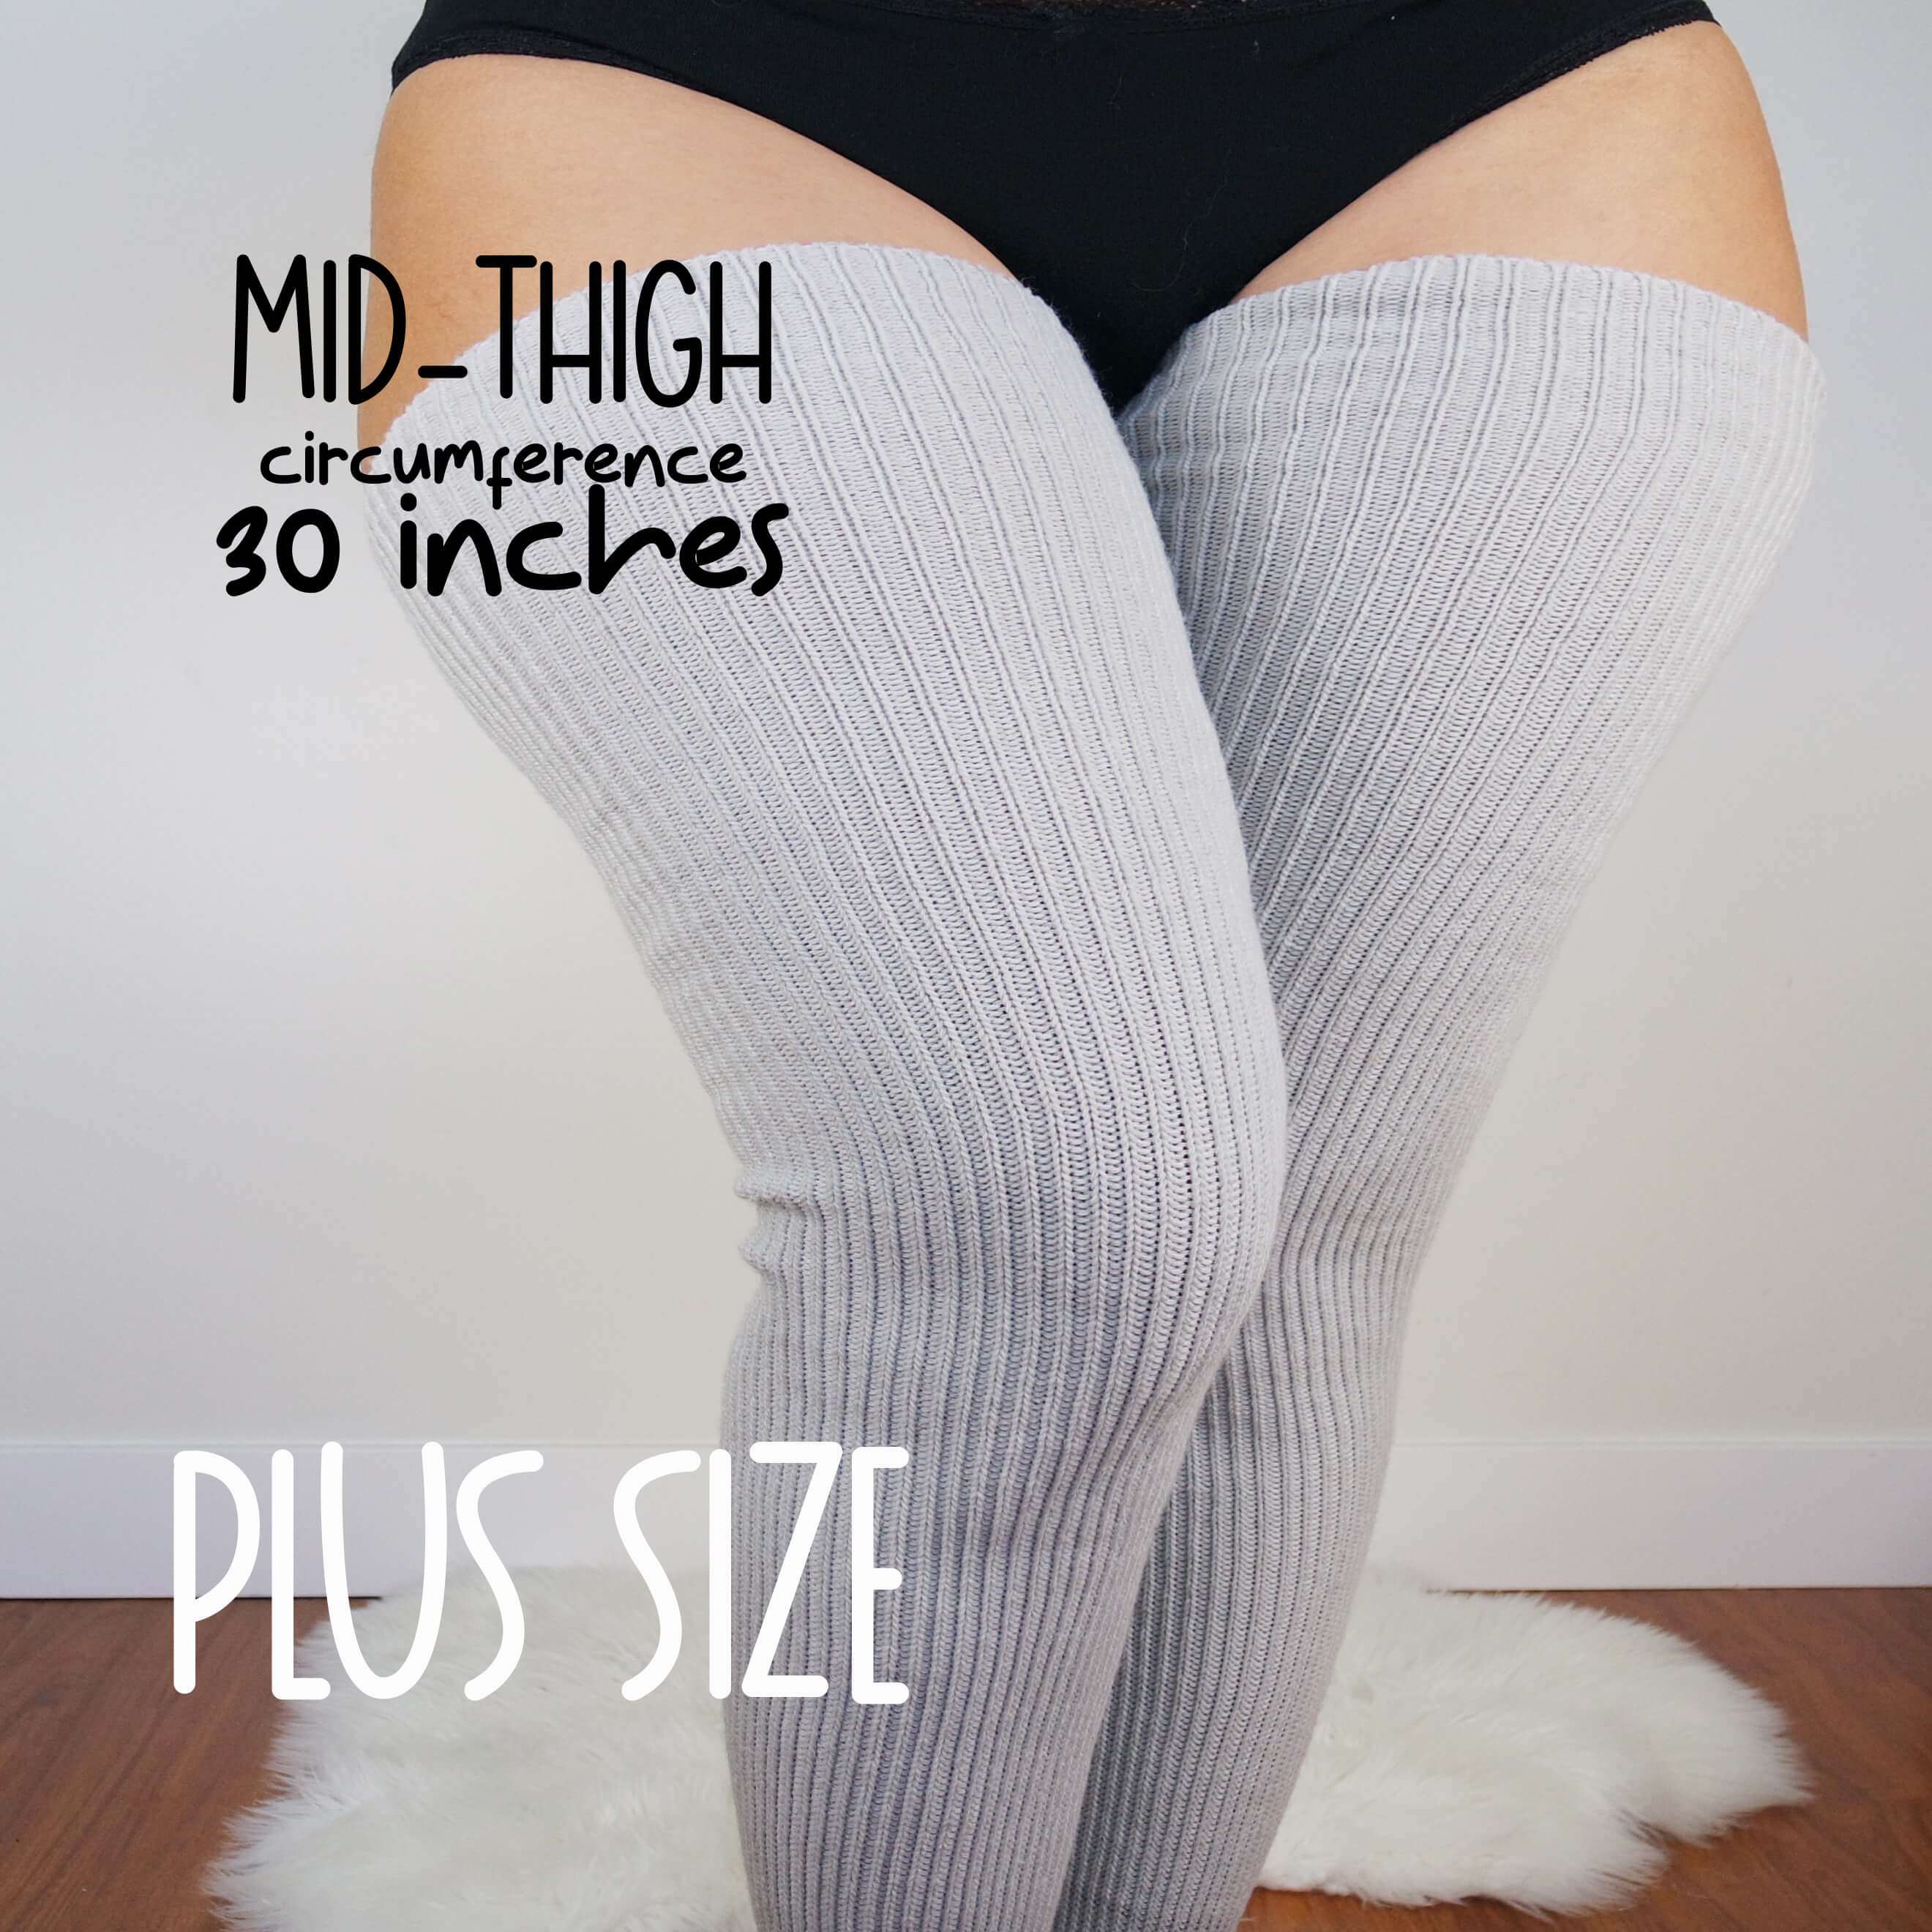 Women's Knee & Thigh High Hosiery